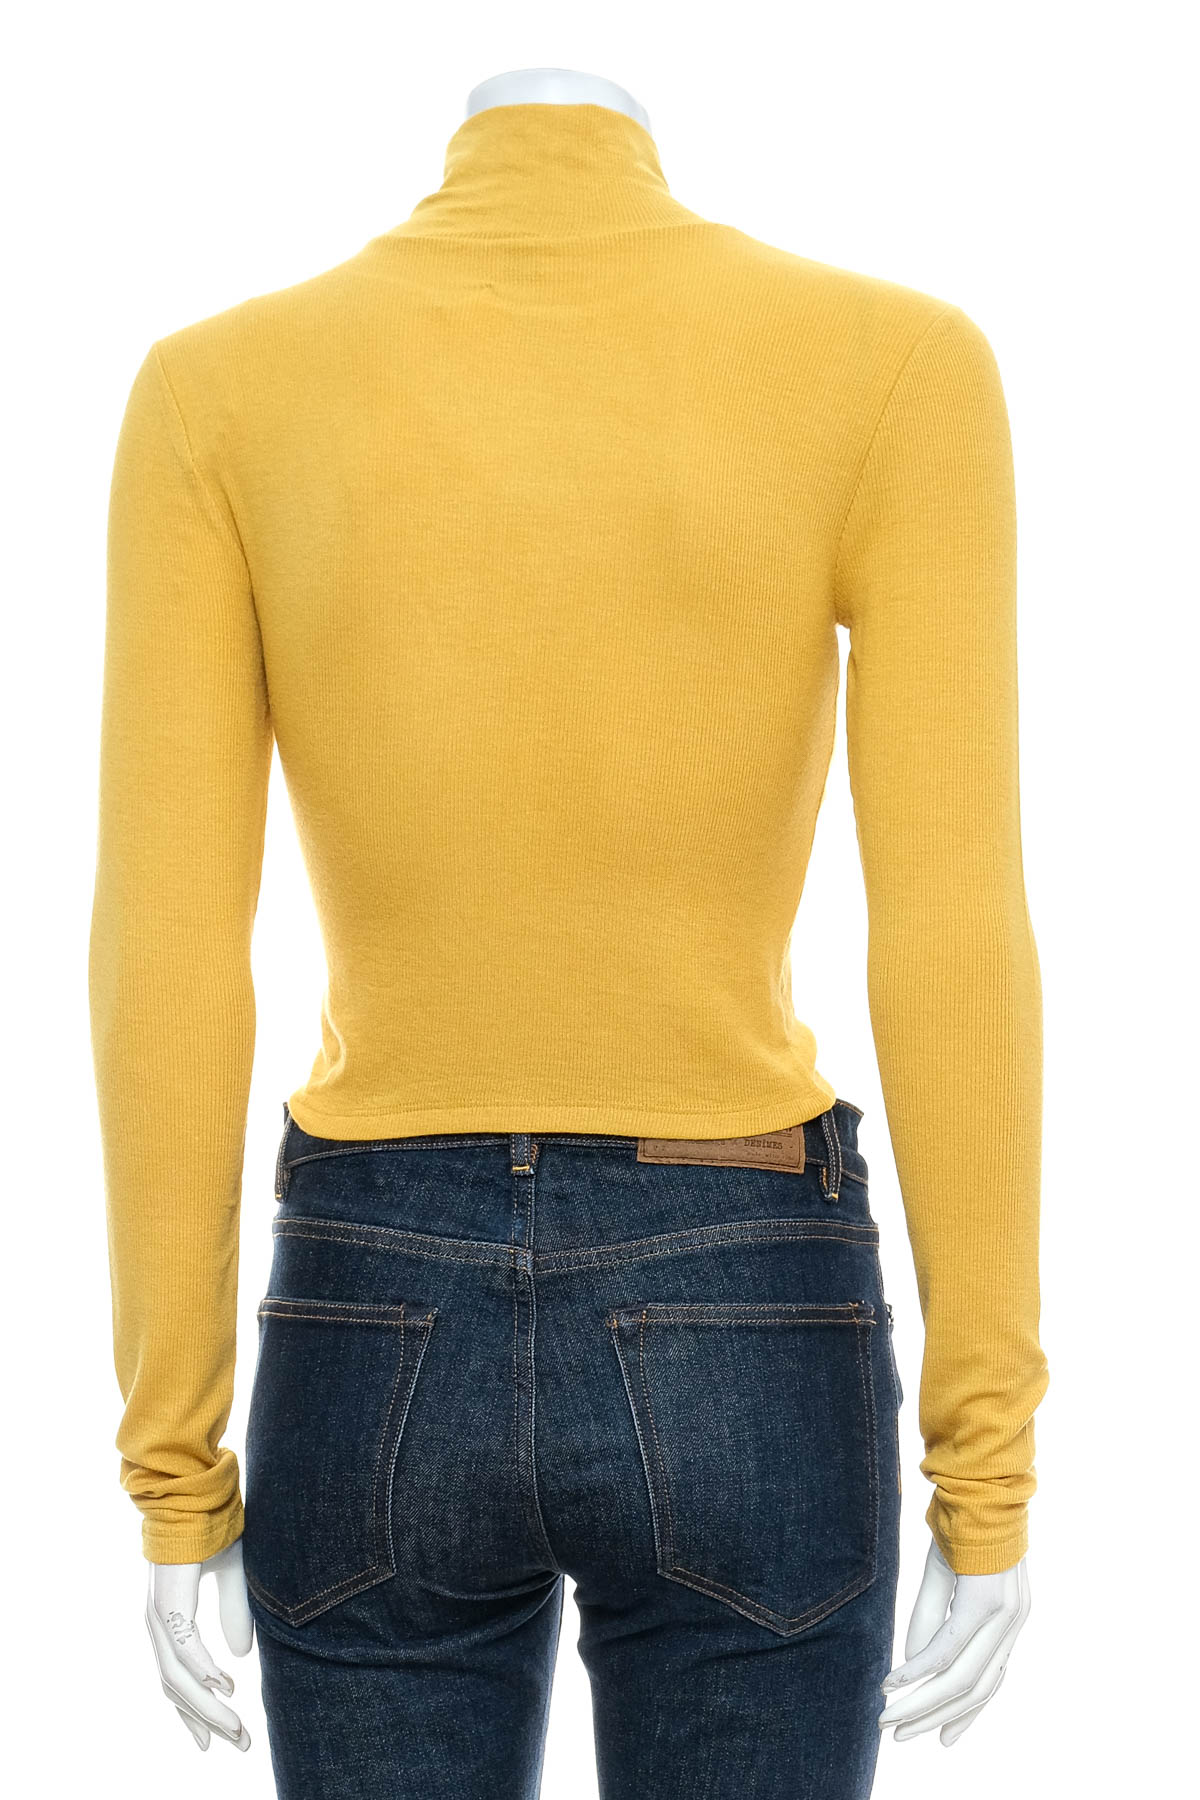 Women's sweater - Wilfred - 1